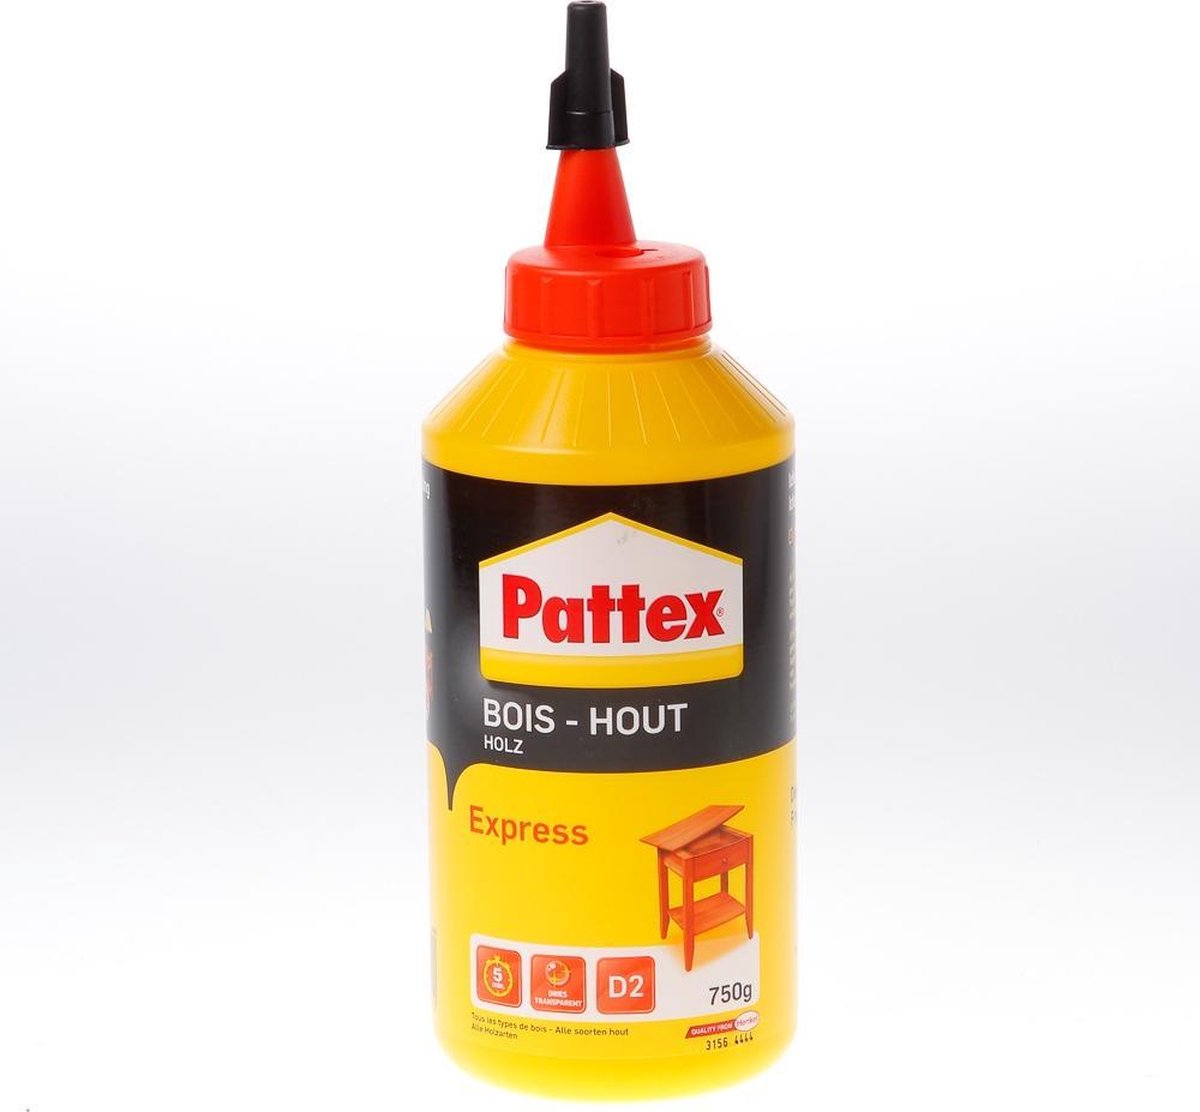 Pattex houtlym D2 750 gram (Prijs per stuk)